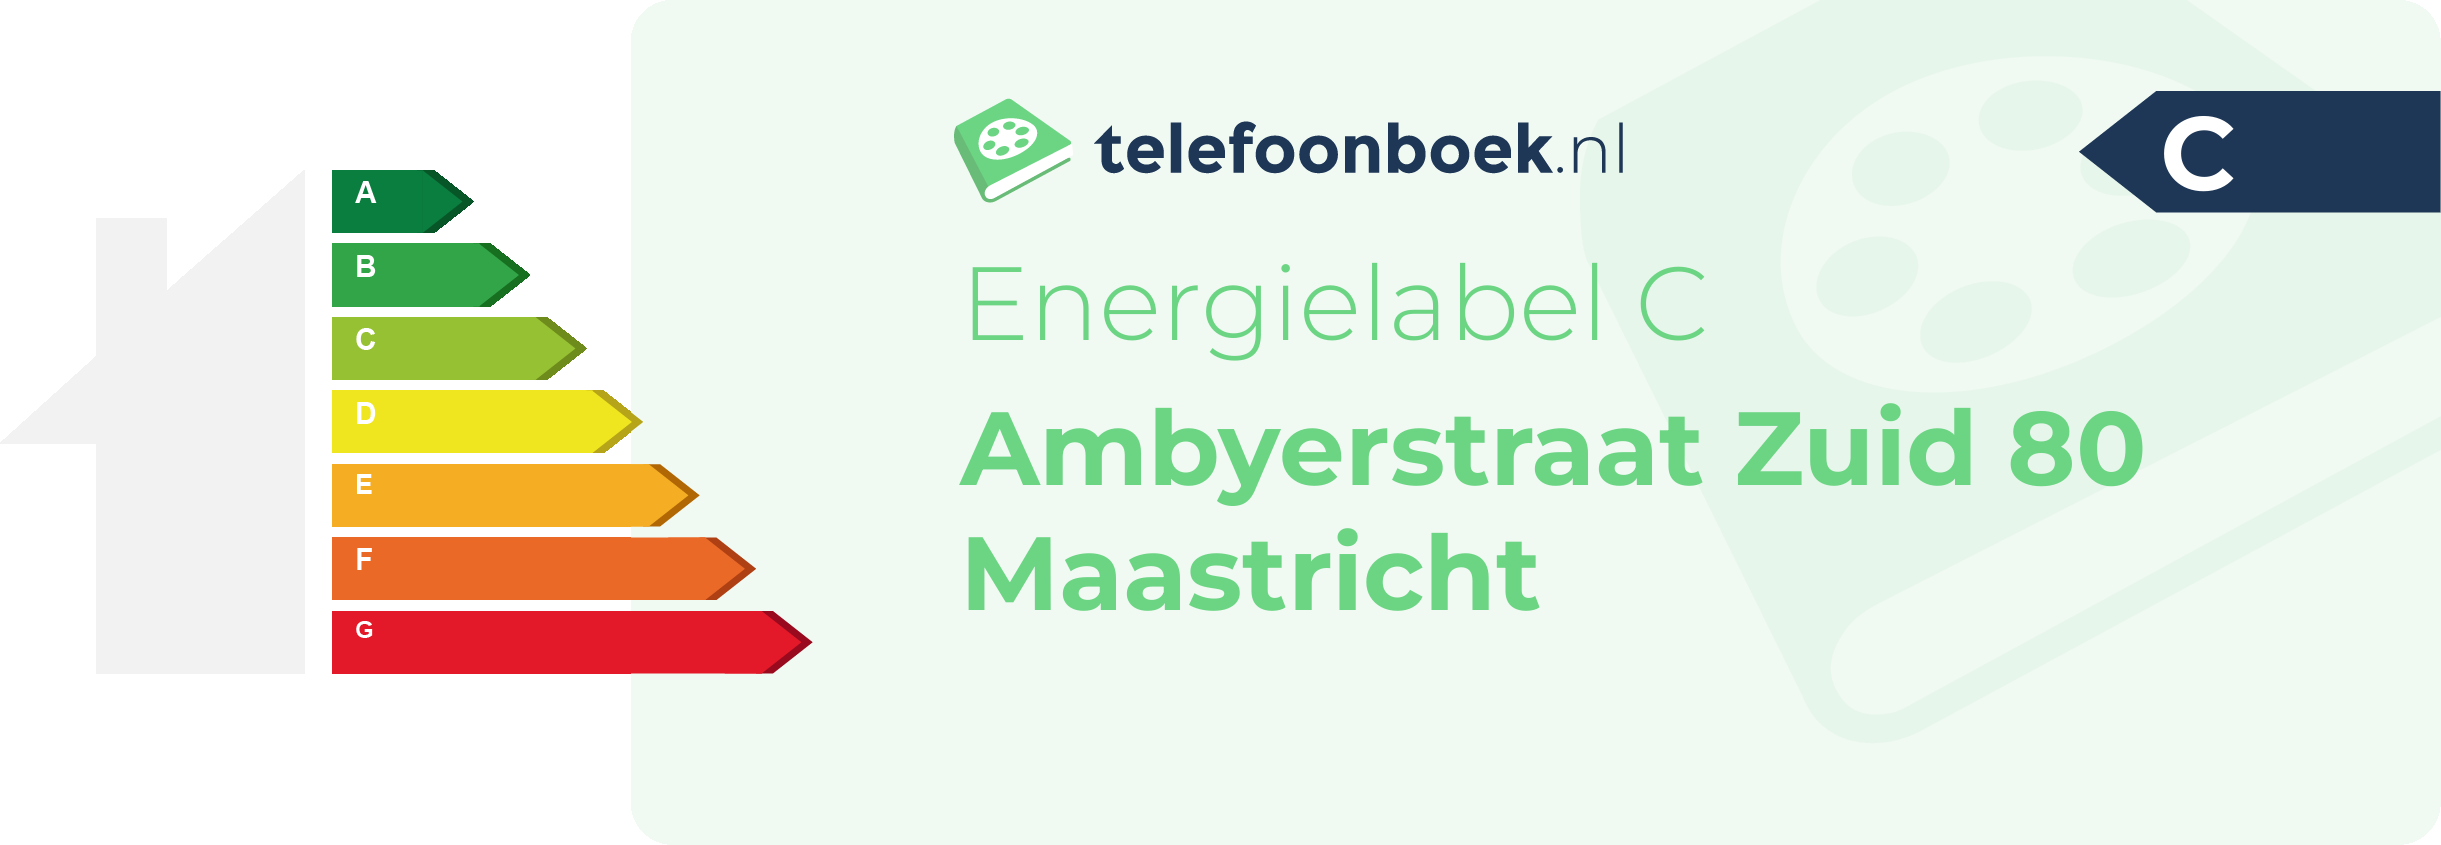 Energielabel Ambyerstraat Zuid 80 Maastricht